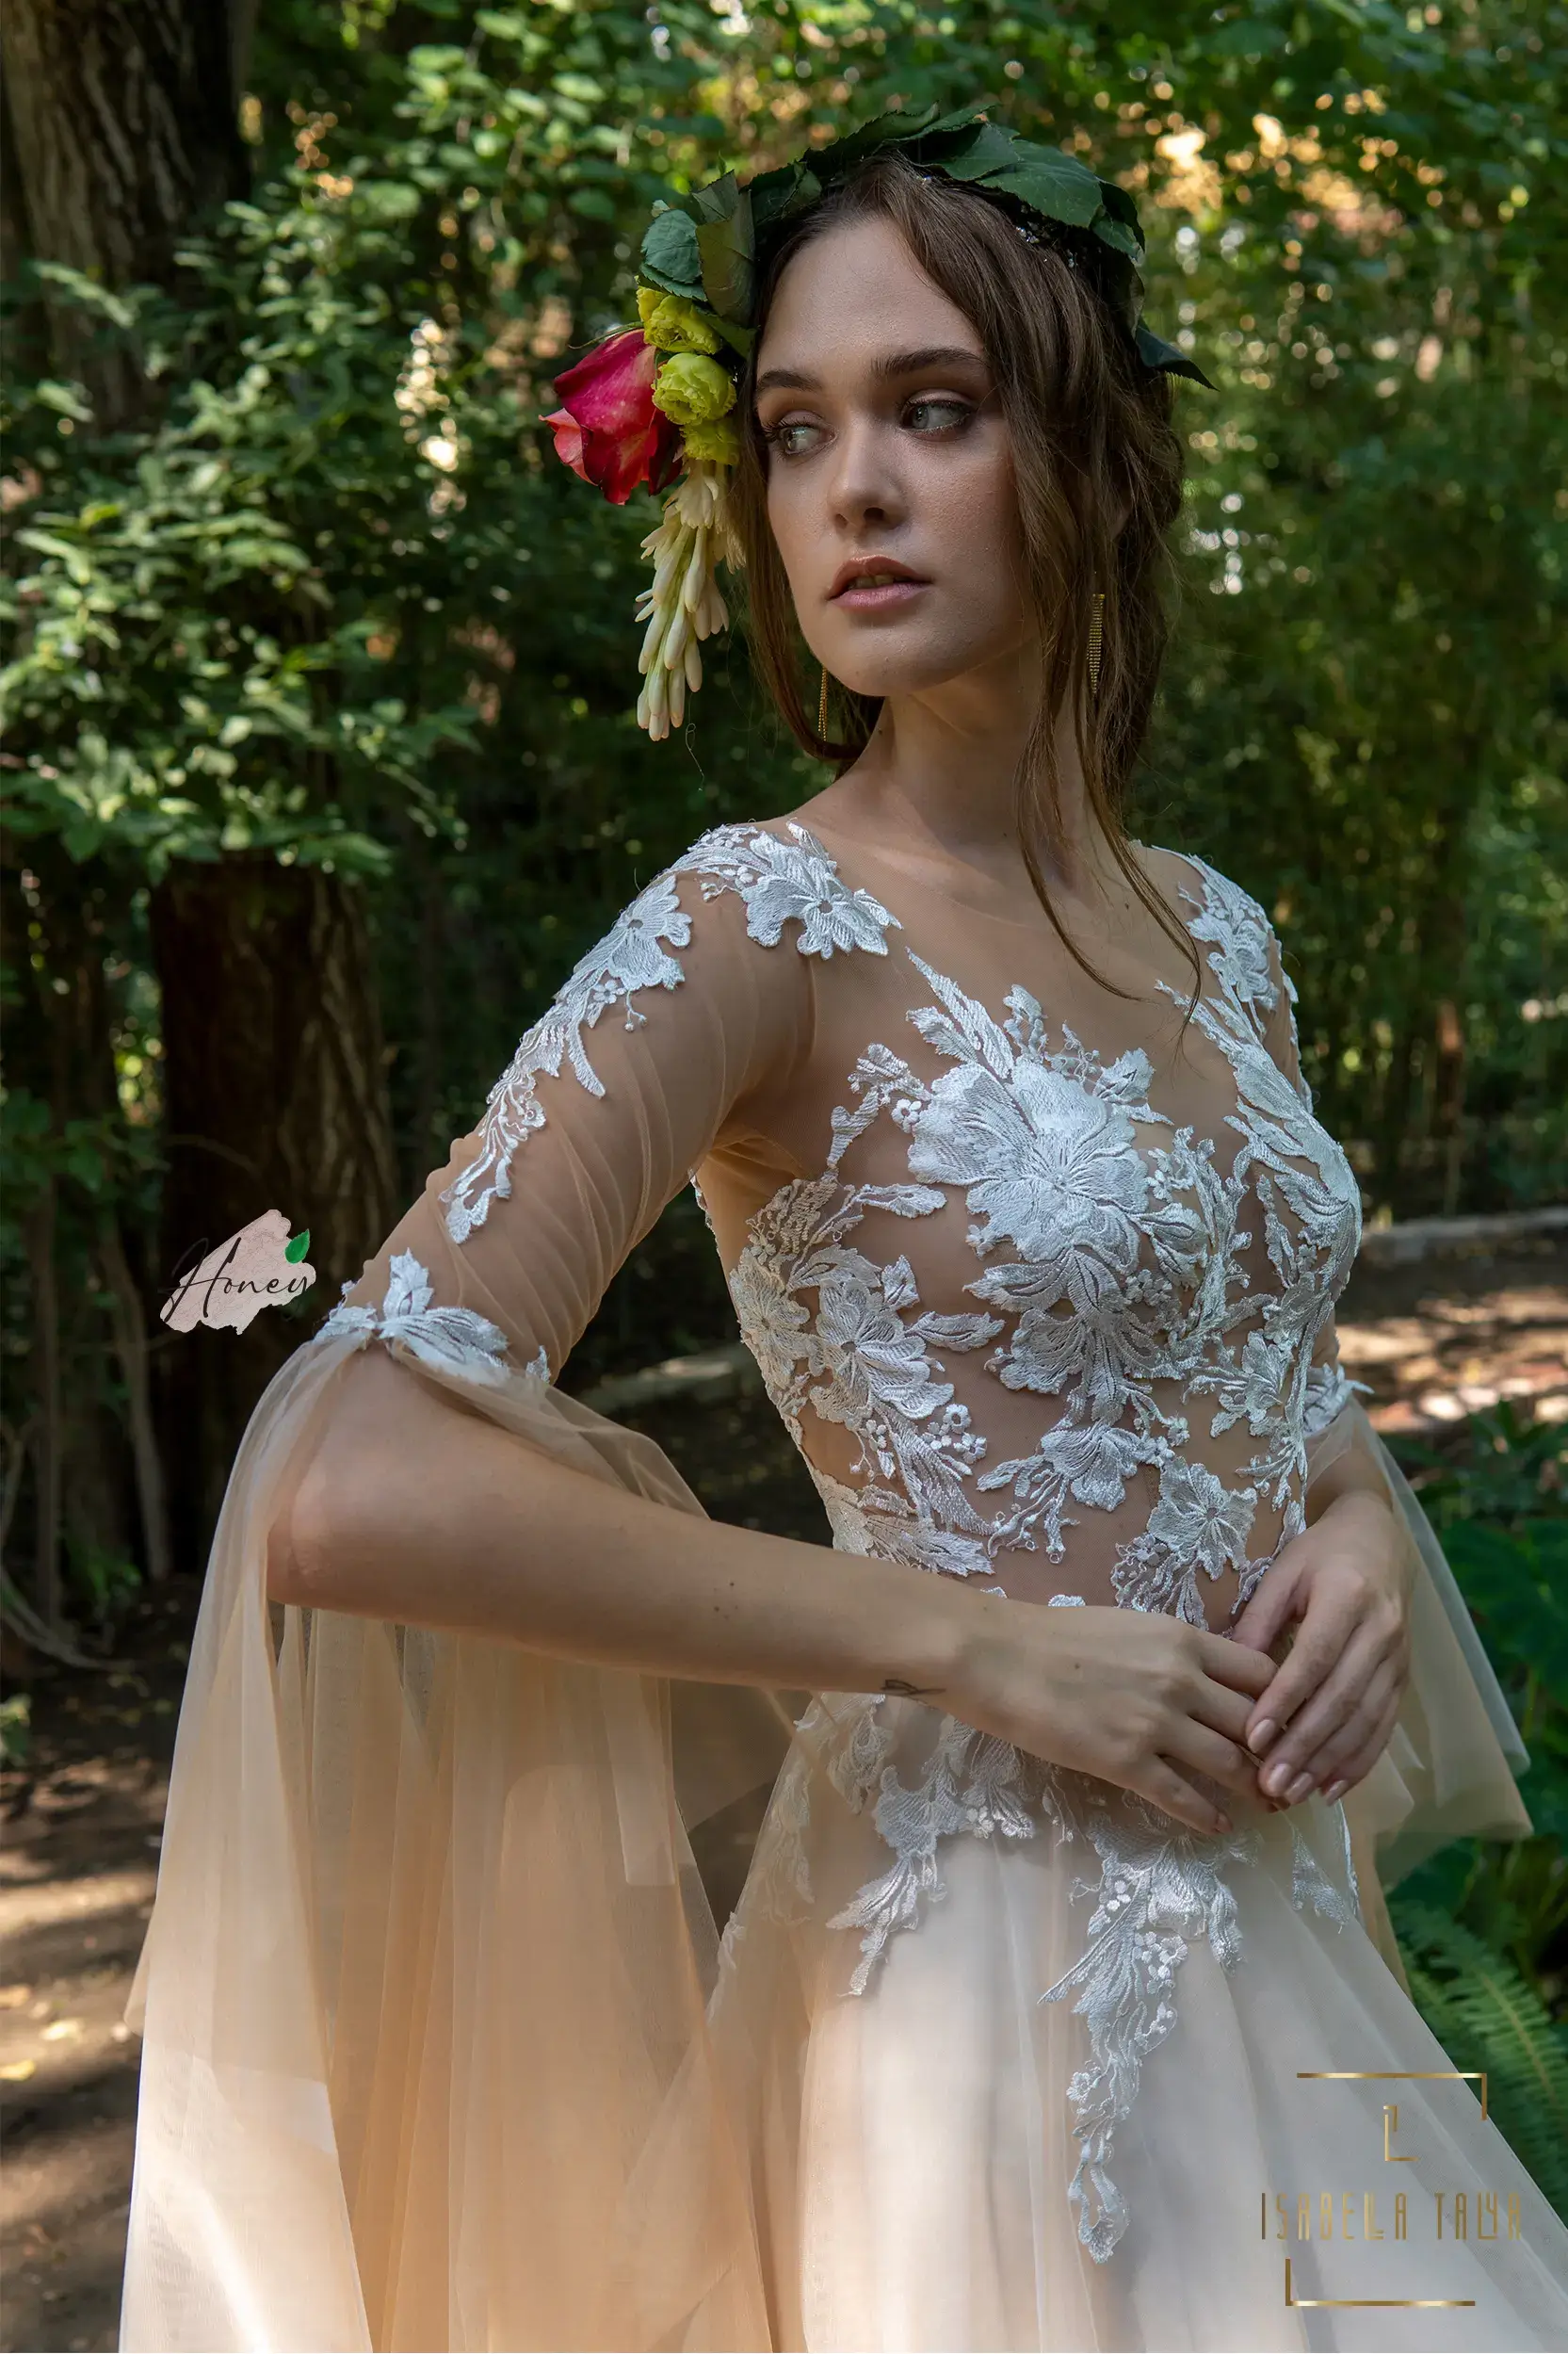 isabella talya wedding dress bridal gown